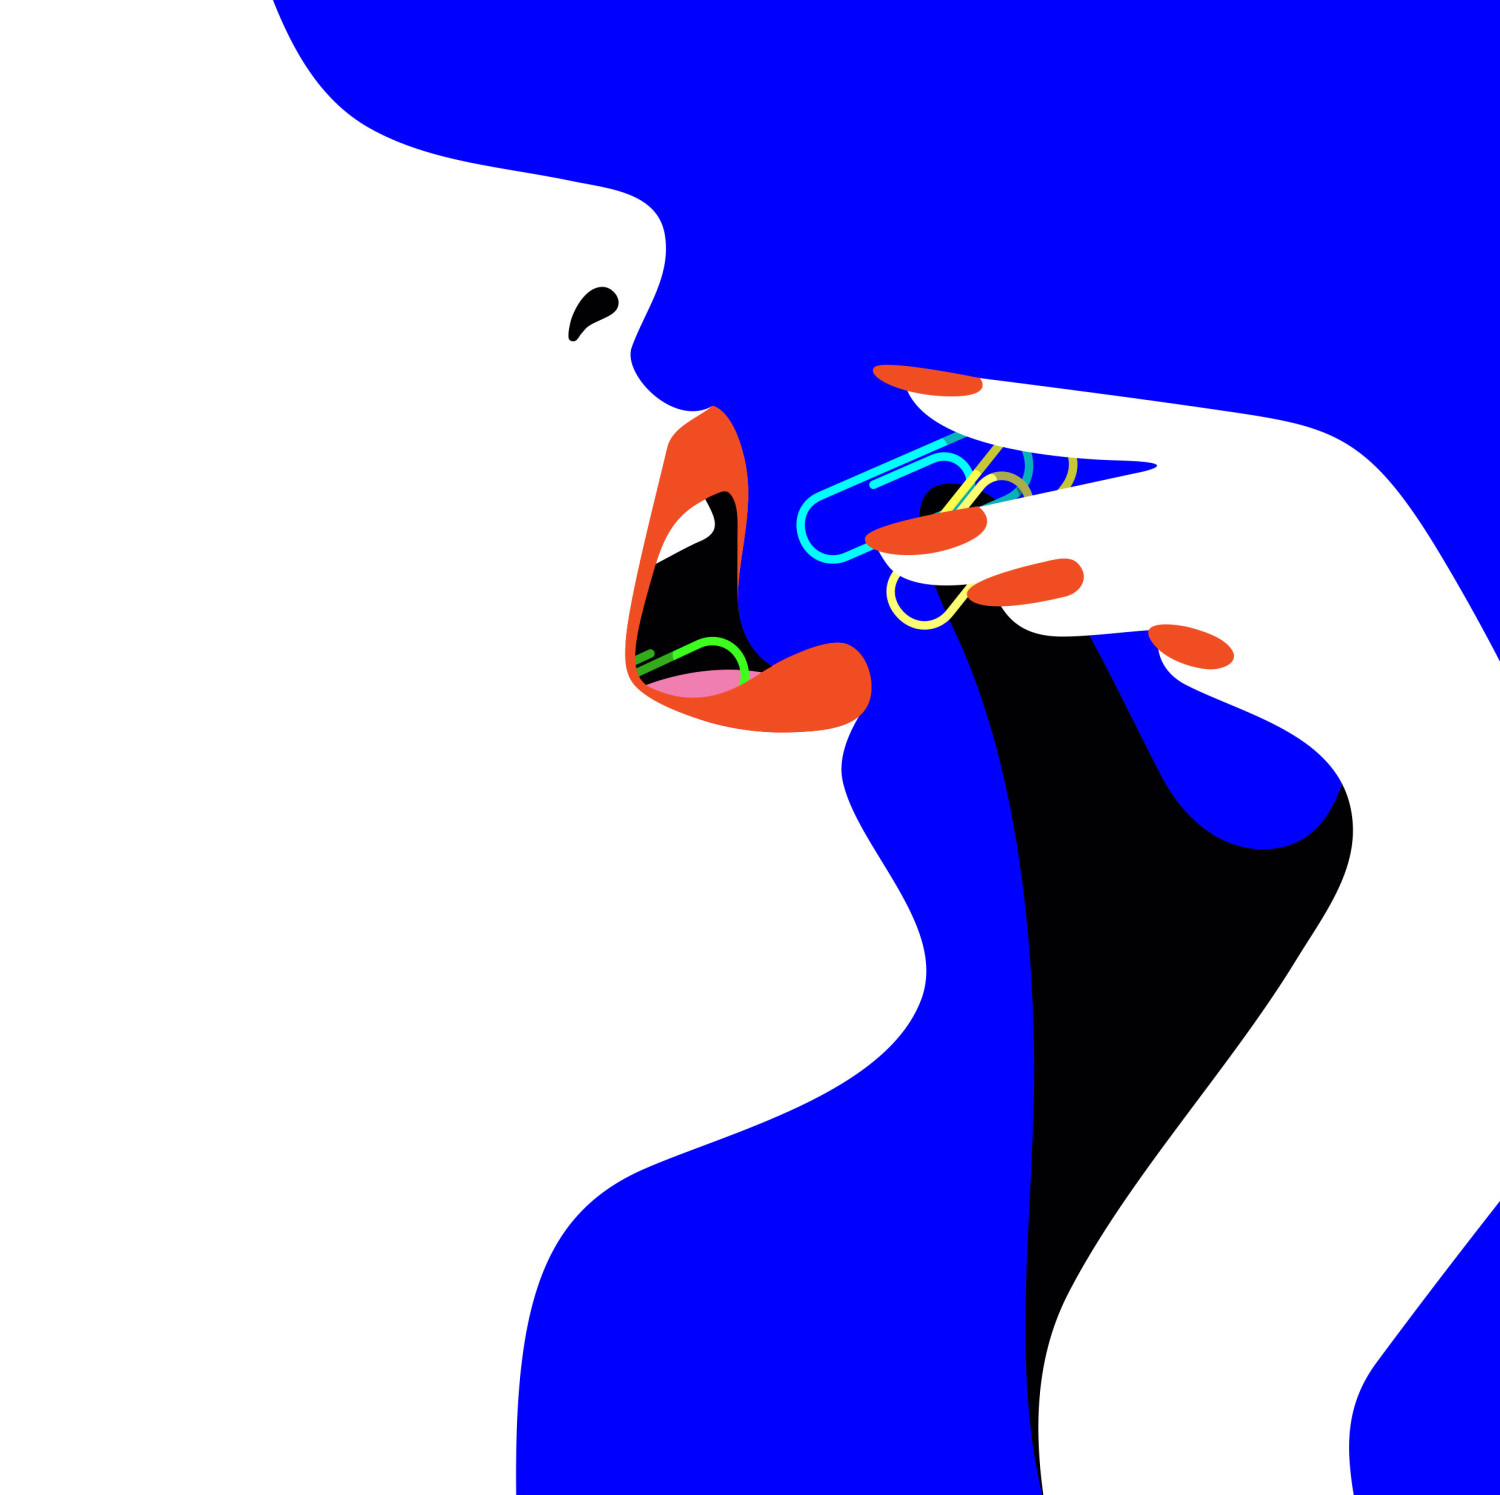 malika favre illustration erotic blue woman